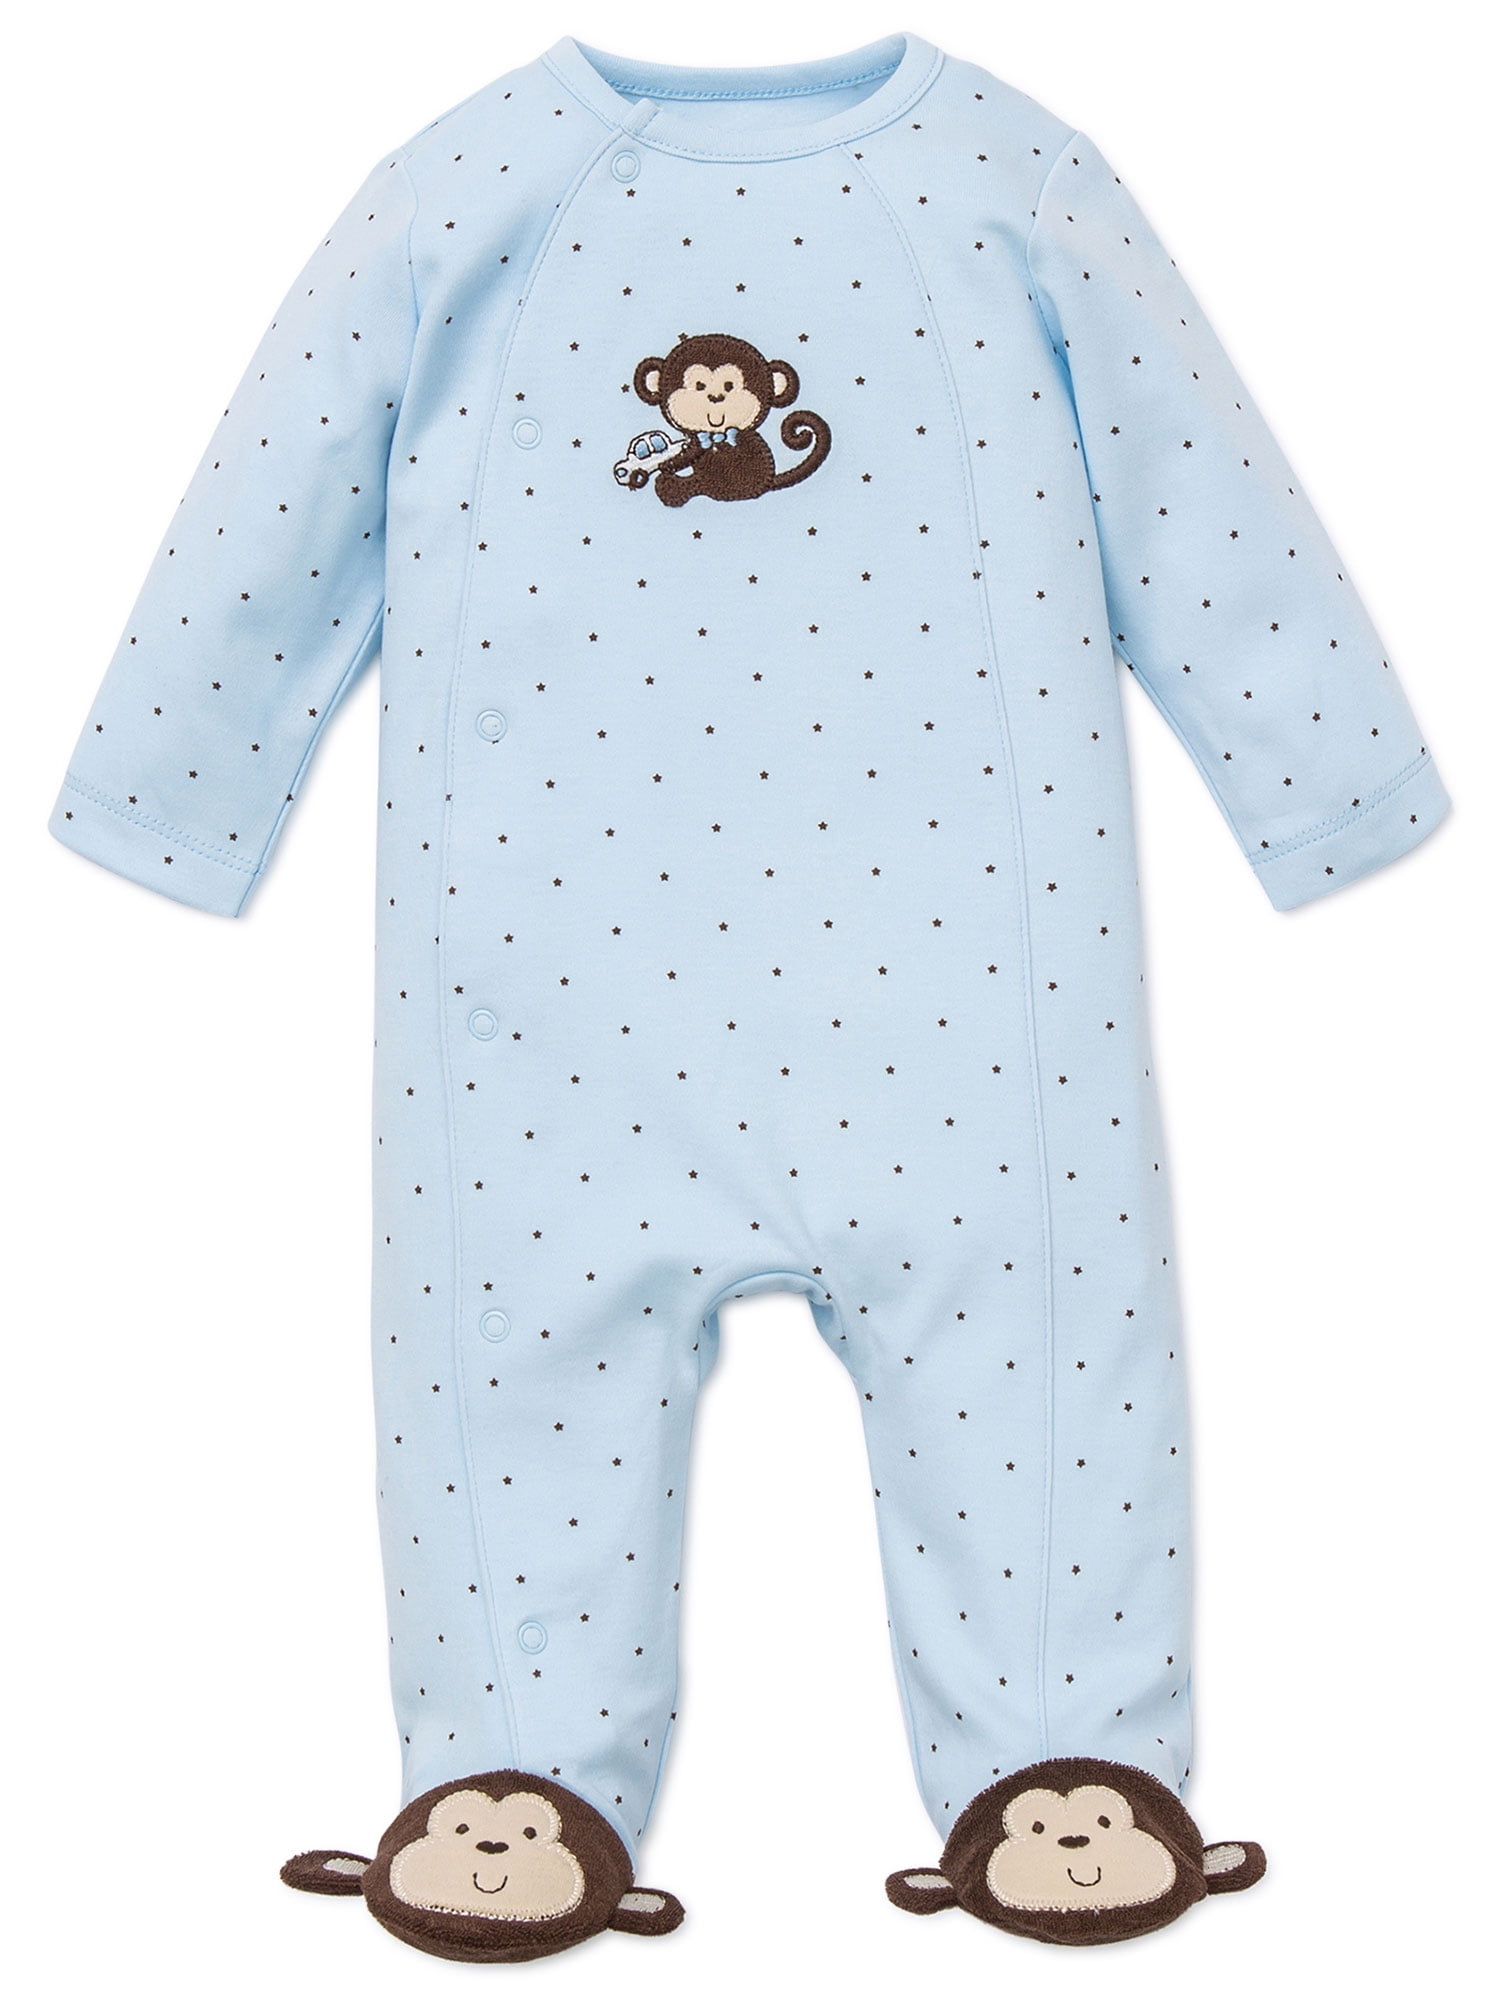 Kids Essentials Baby Boy Sleepsuit Romper Playsuit with Feet 3 Pack 